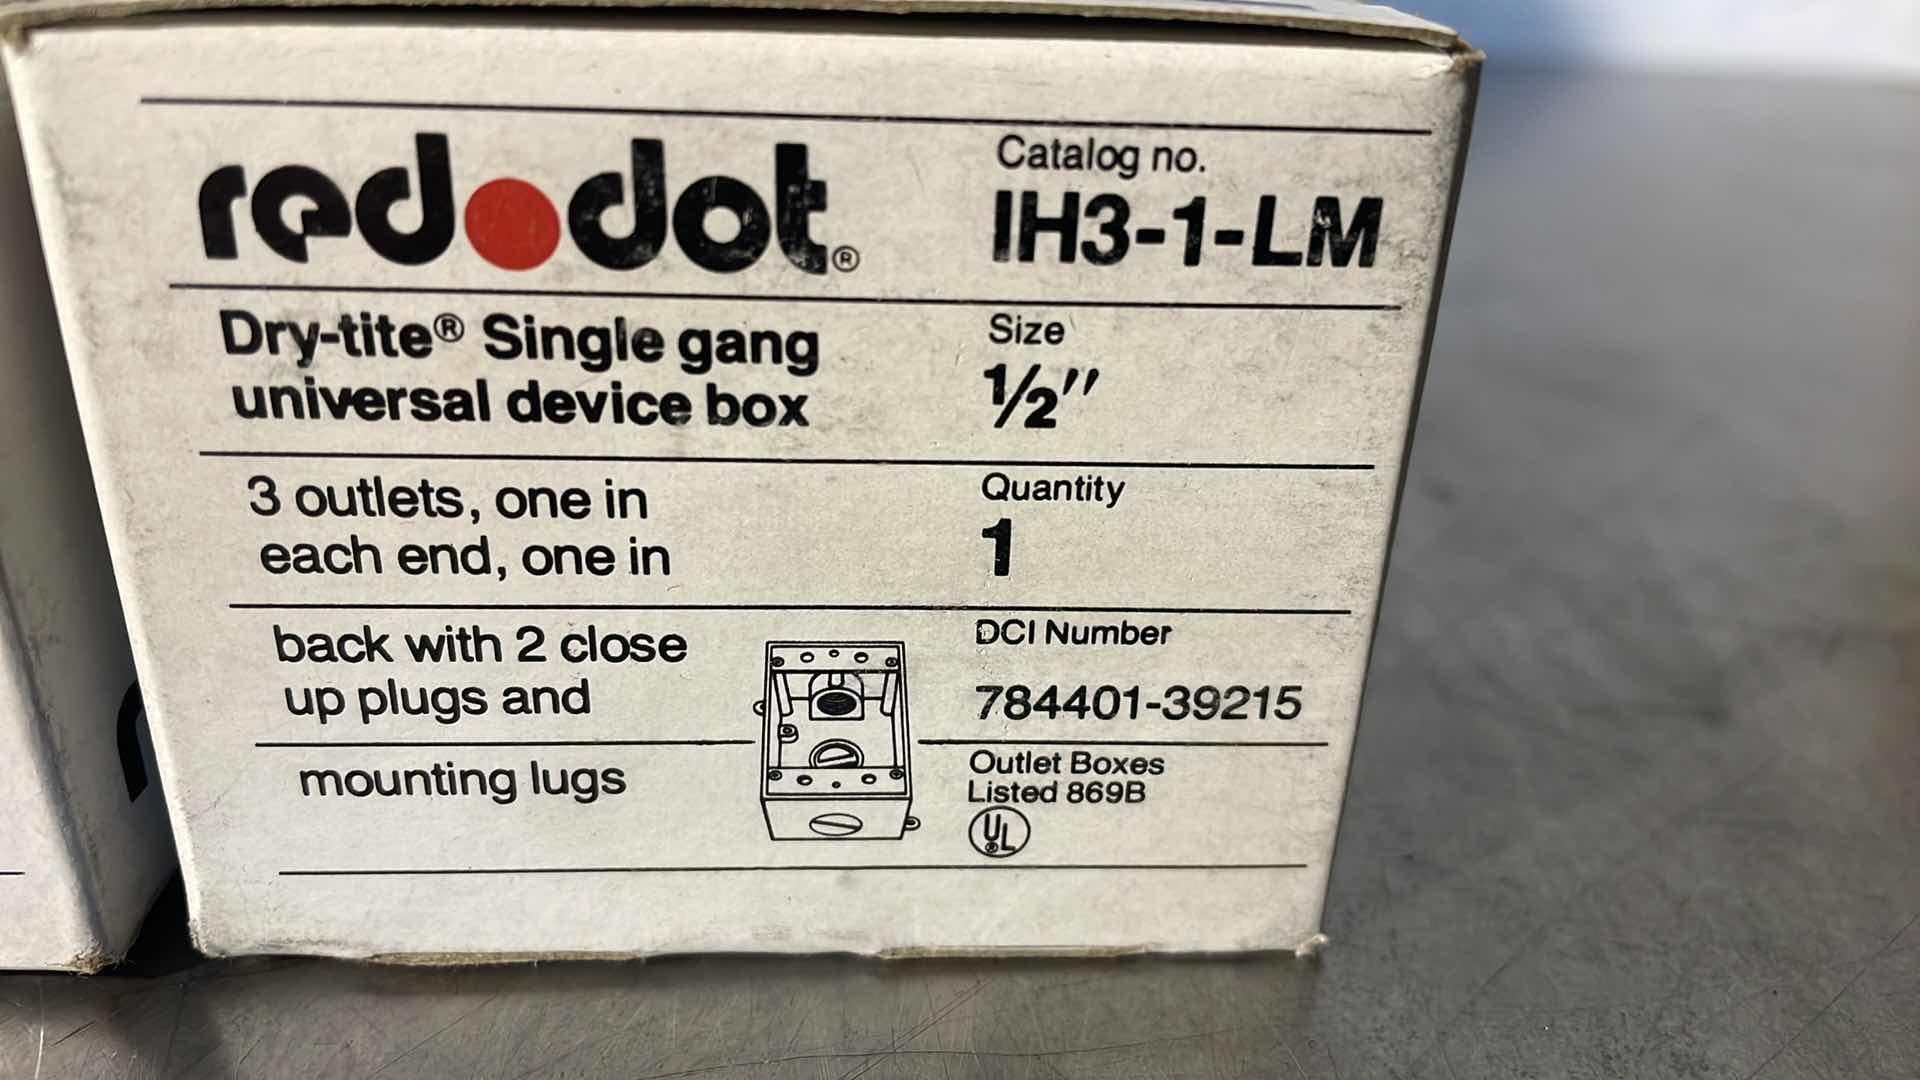 Photo 2 of REDDOT DRYTITE SINGLE GANG UNIVERSAL DEVICE BOX 1/2” IH3-1-LM (4)